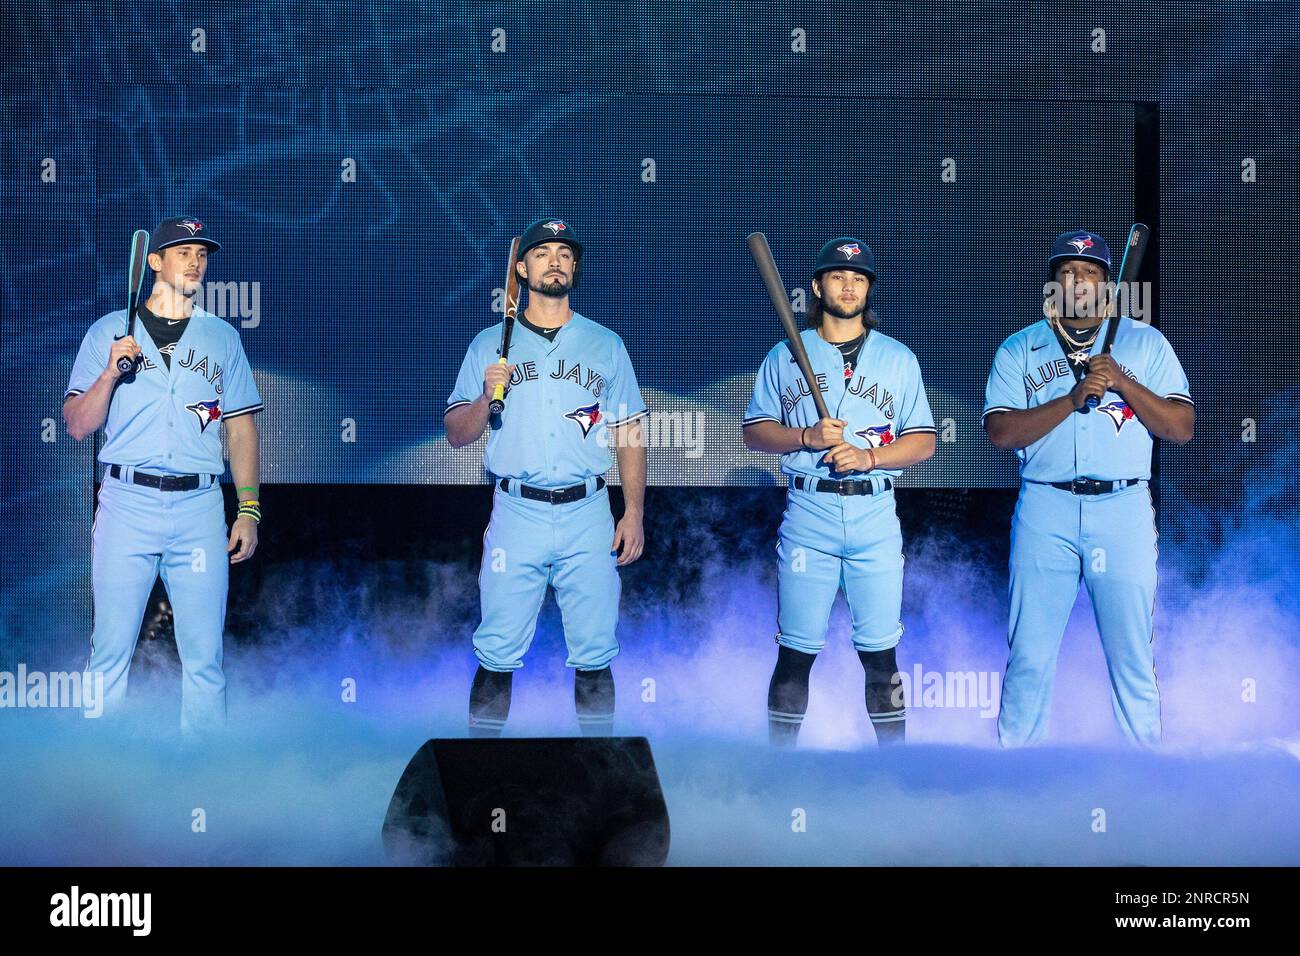 Blue Jays unveil New Blue uniform for 2020 MLB season